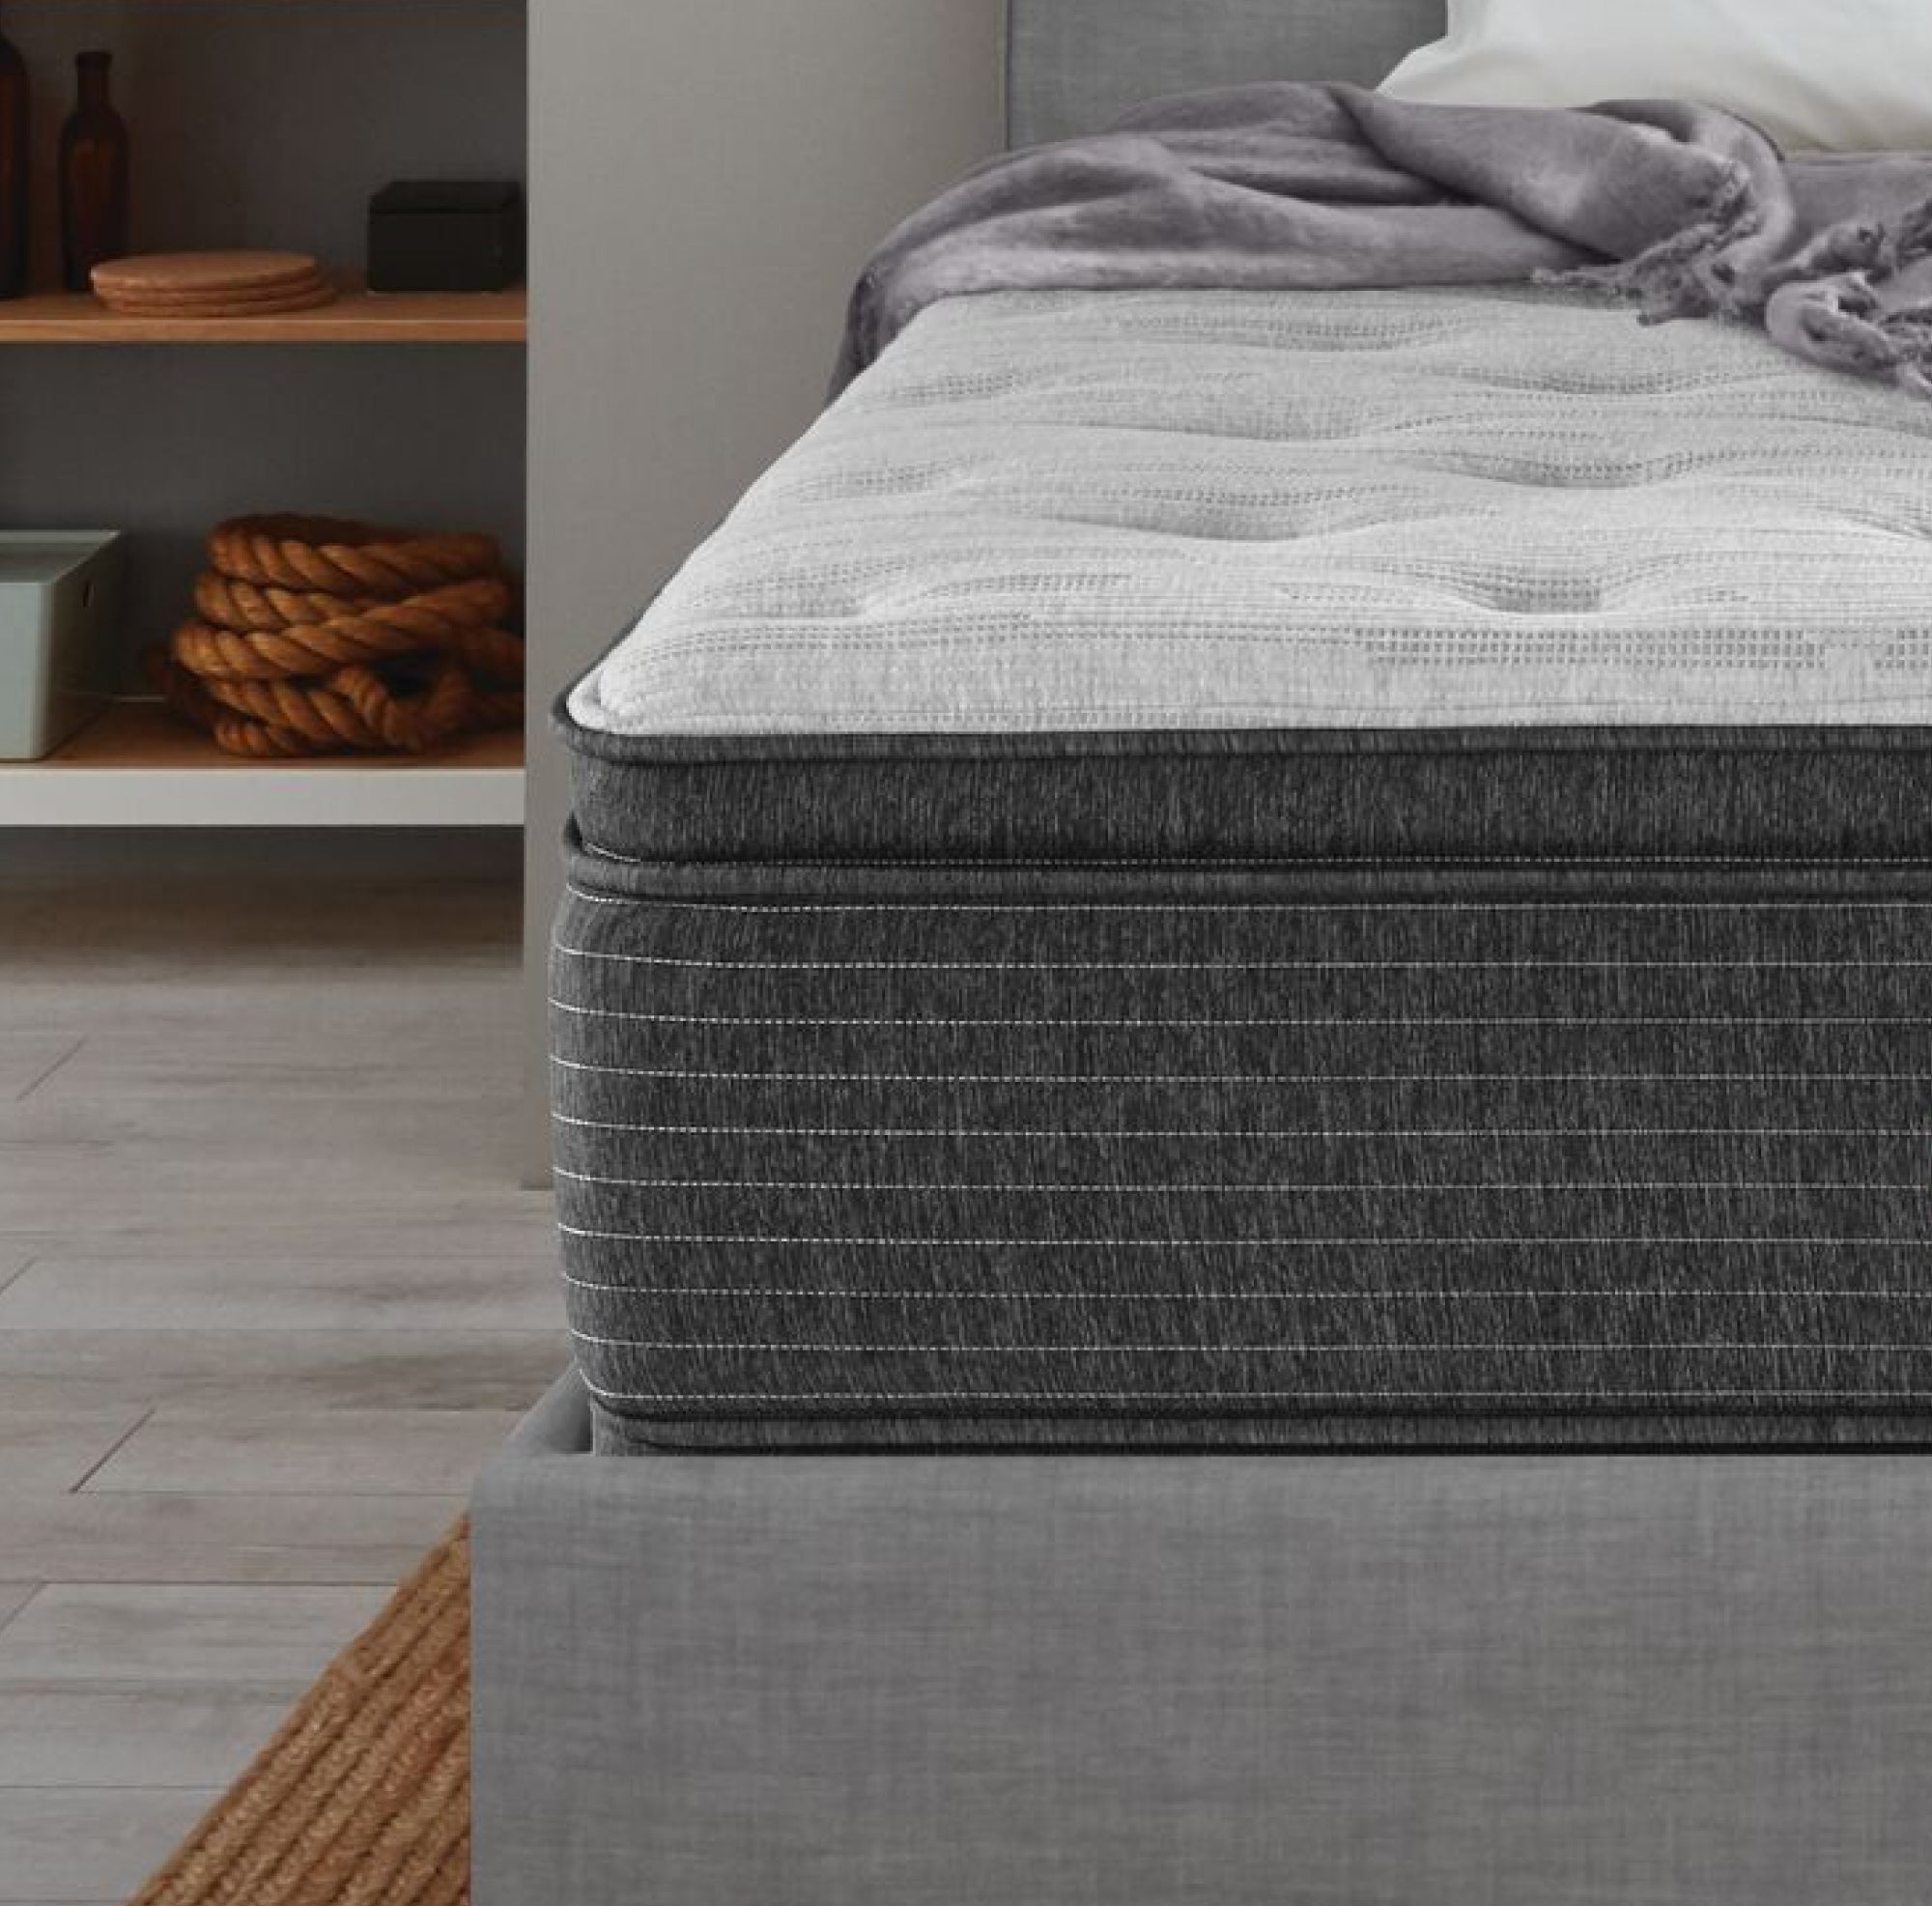 Corner view of the Beautyrest Select mattress ||feel: Plush Pillow Top